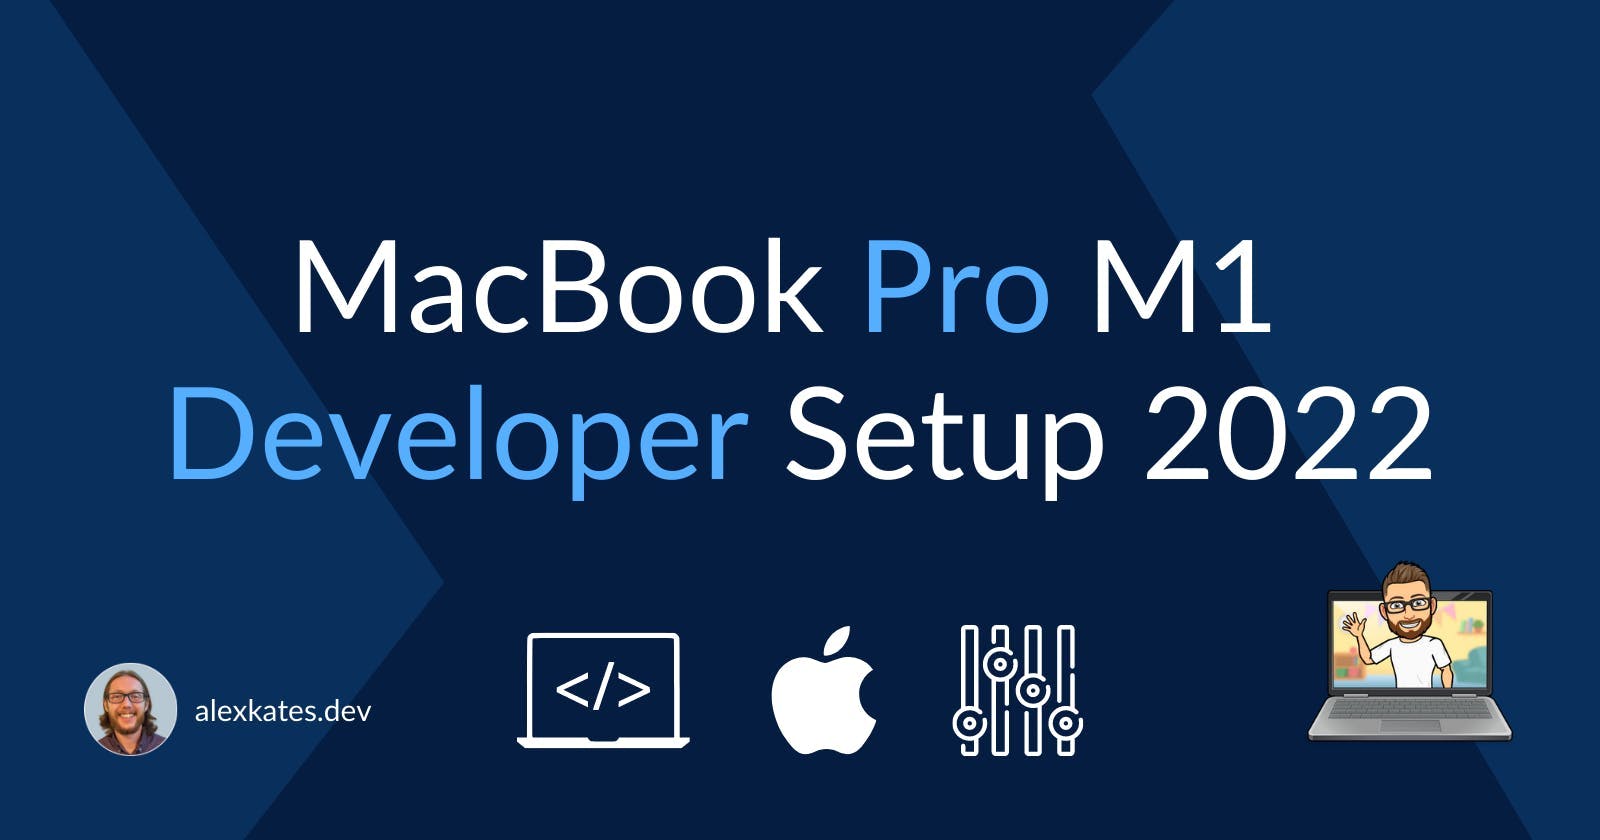 MacBook Pro M1 Developer Setup 2022